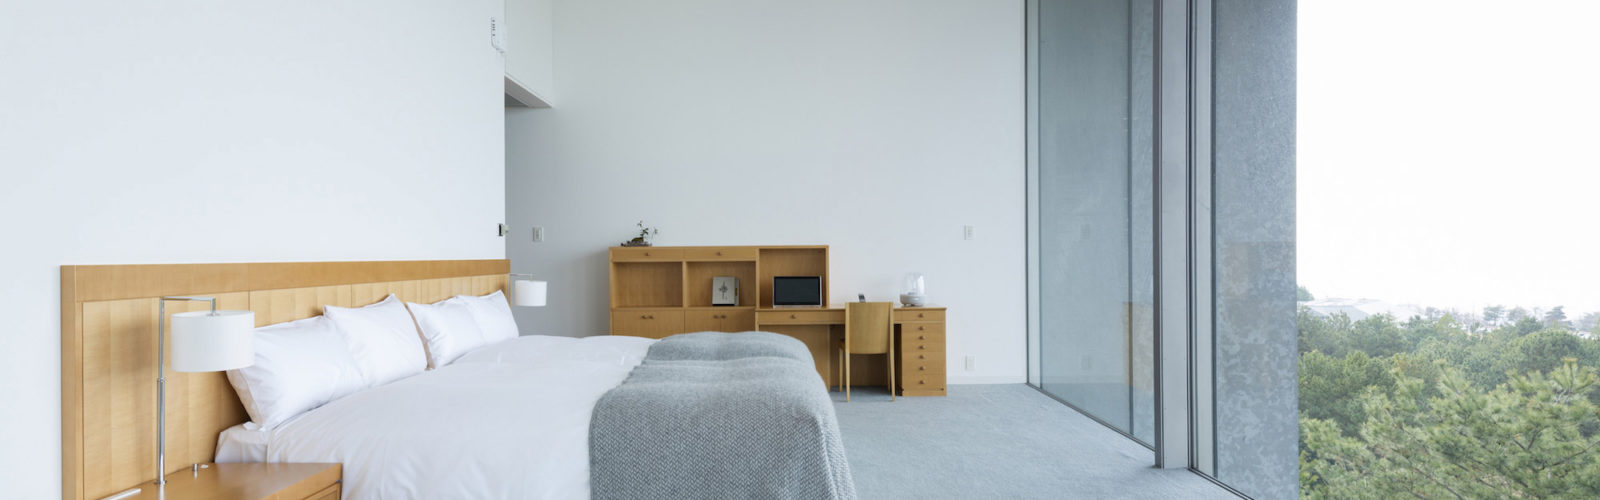 setouchi-aonagi-retreat-bedroom